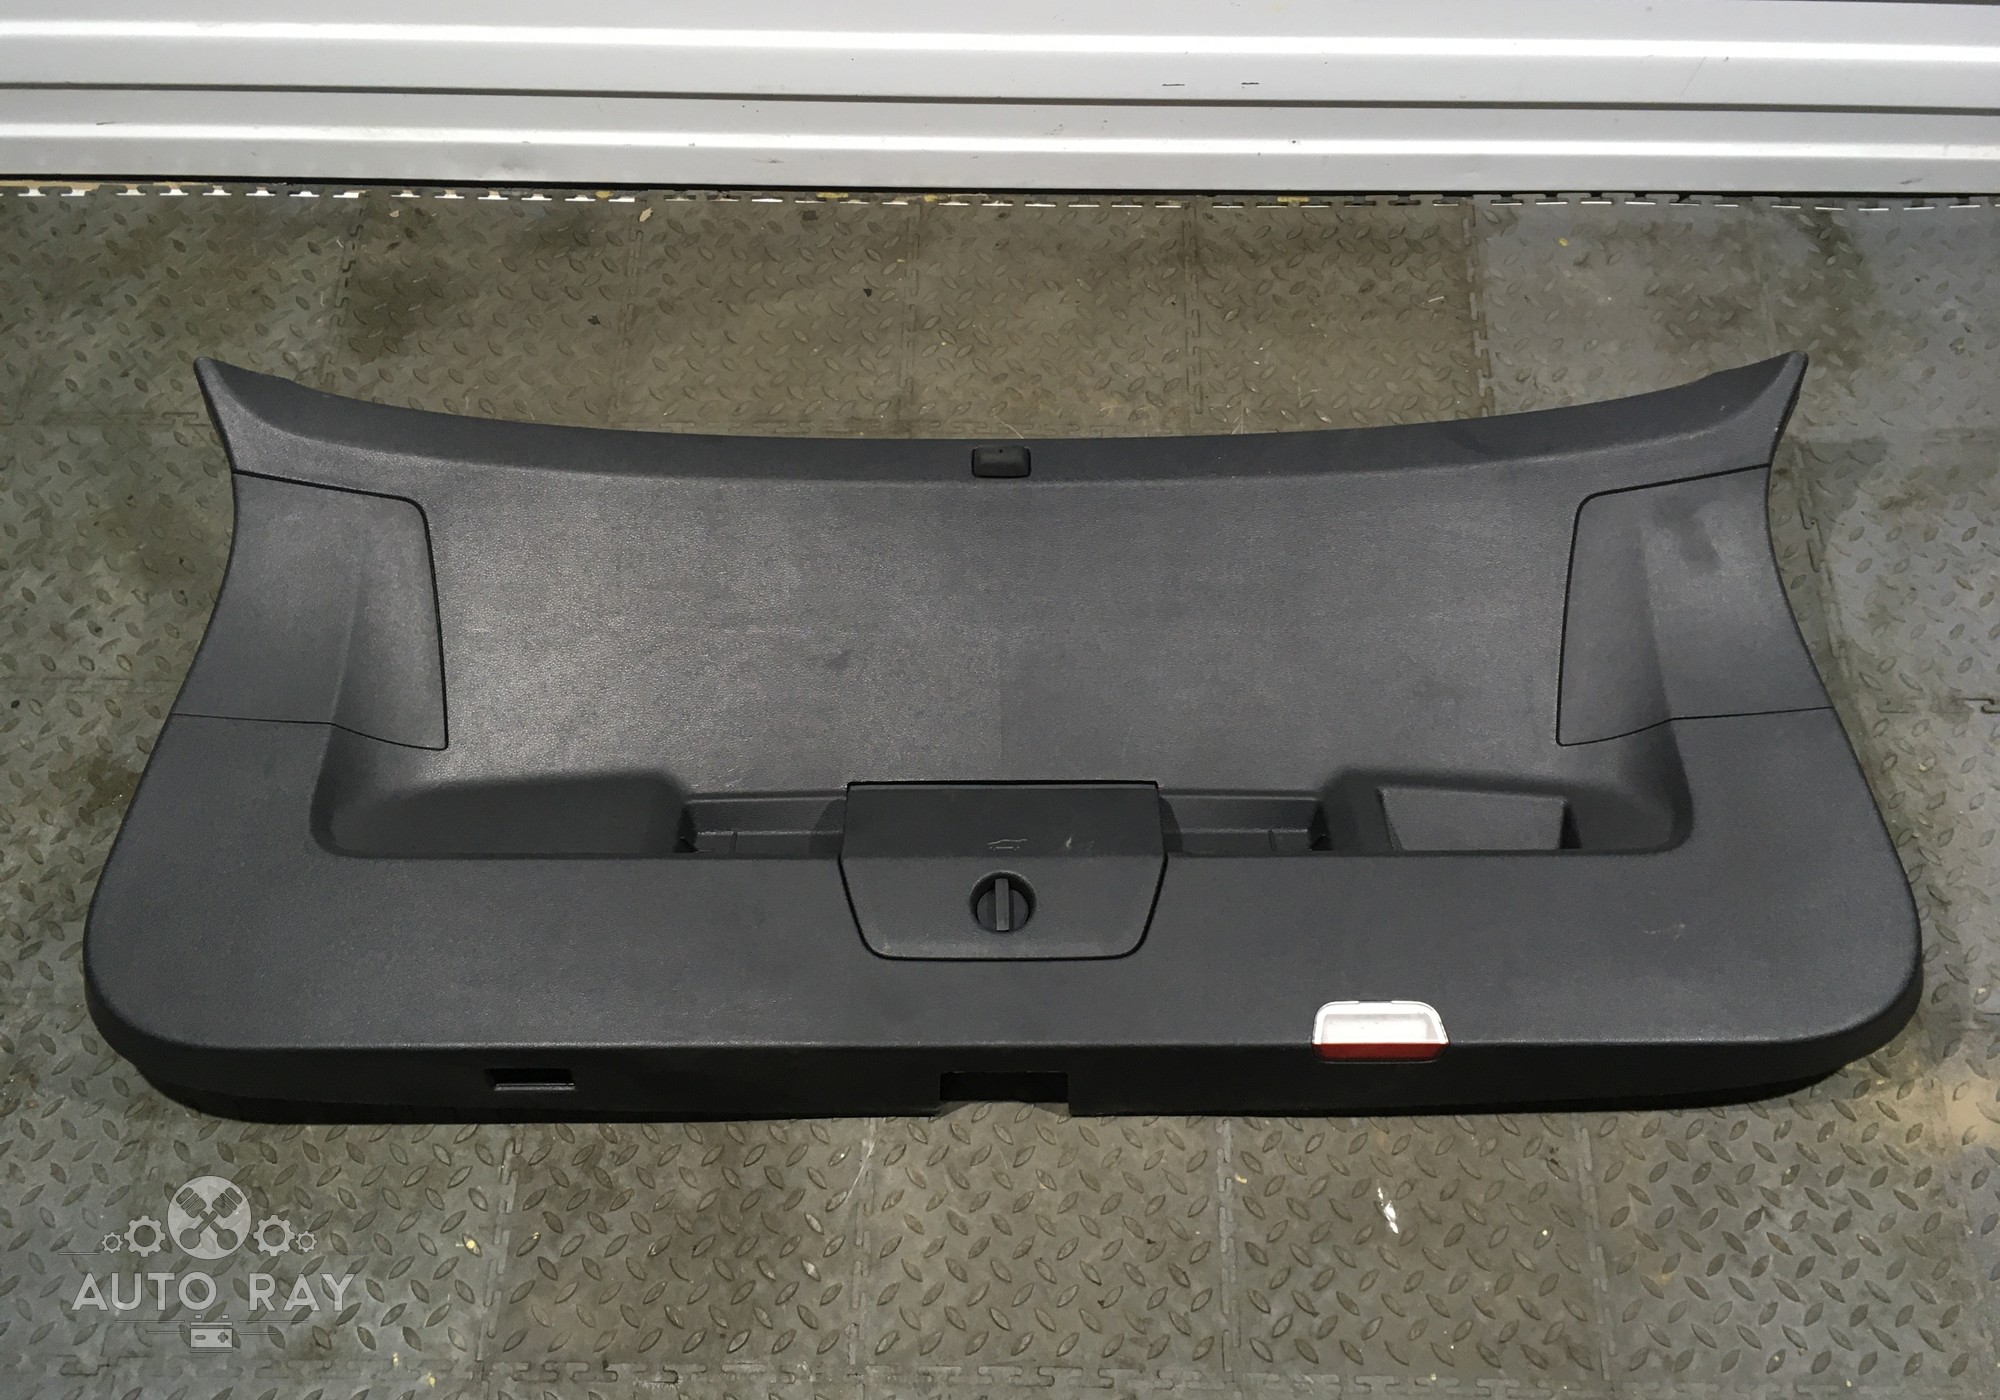 5NA867601 Обшивка двери багажника для Volkswagen Tiguan II (с 2016)